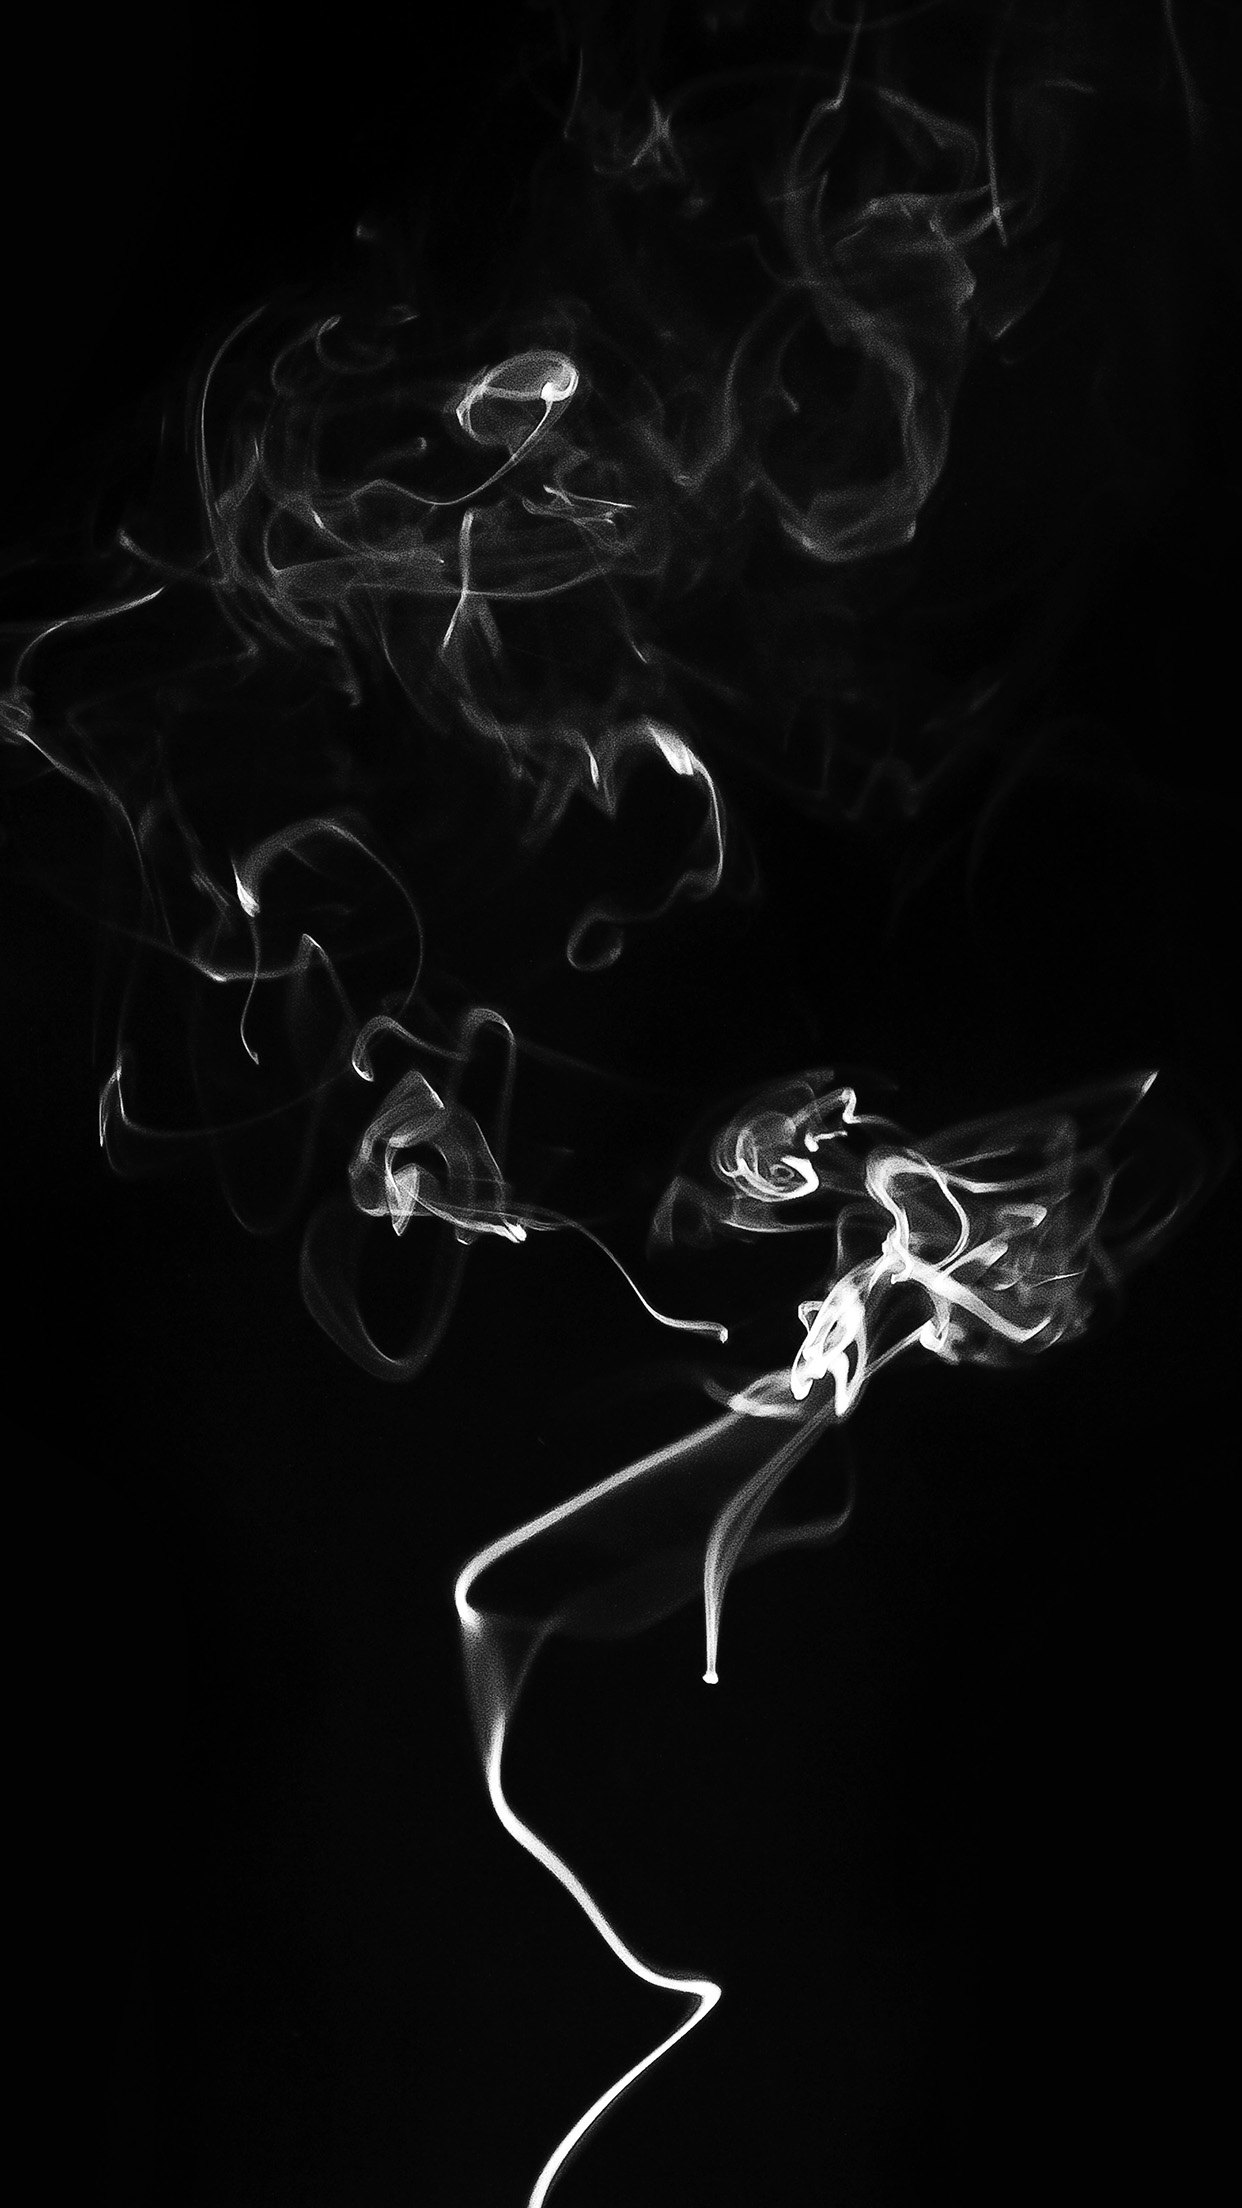 iPhone X wallpaper. smoke bw dark minimal black